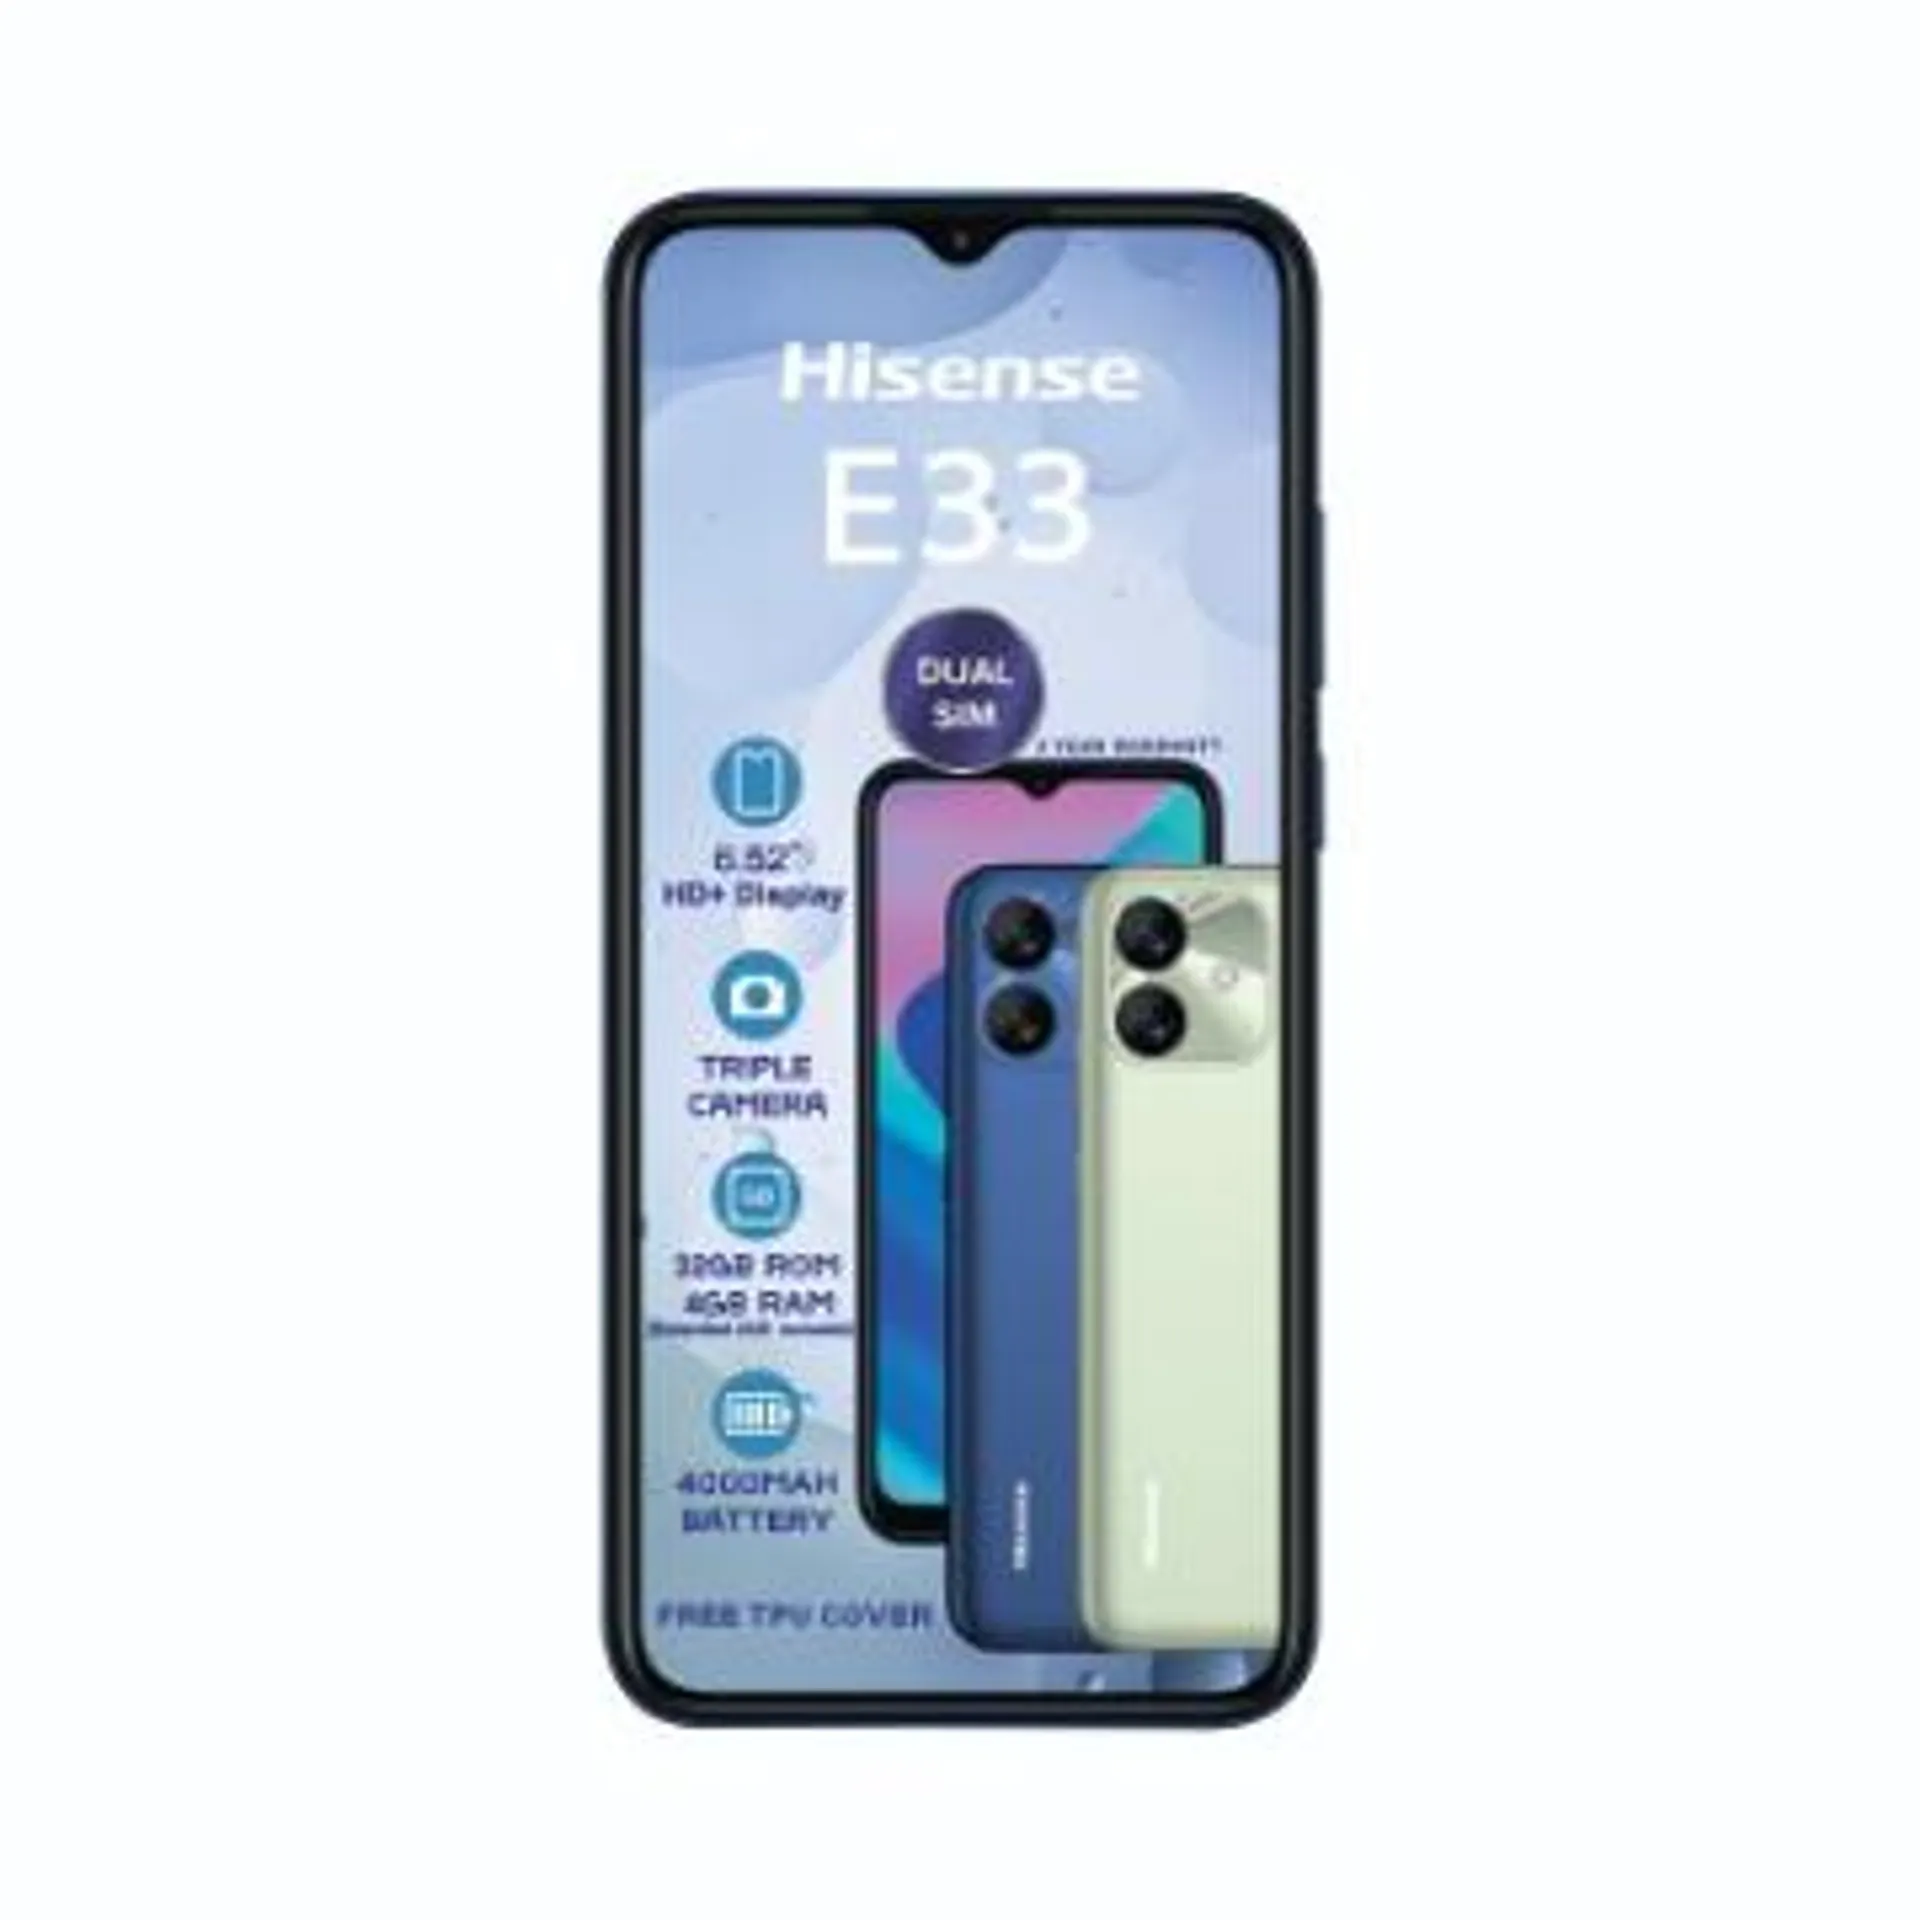 Hisense Cellphone E33